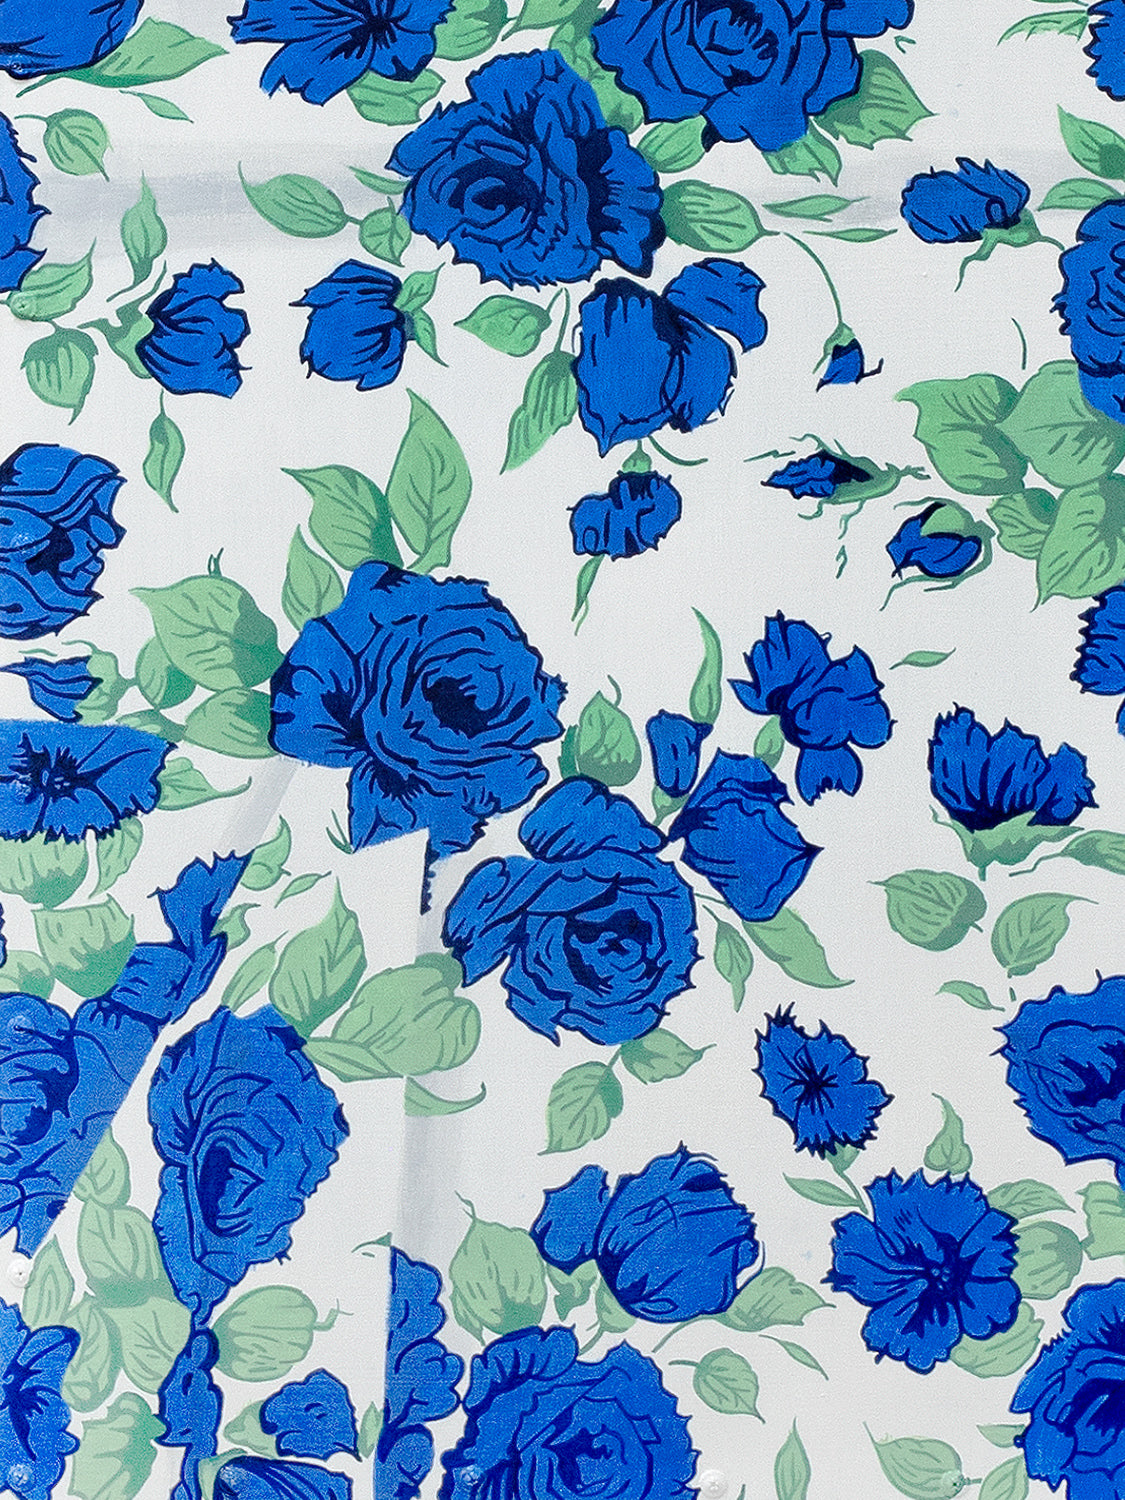 Liberty Roses (Blue Roses)